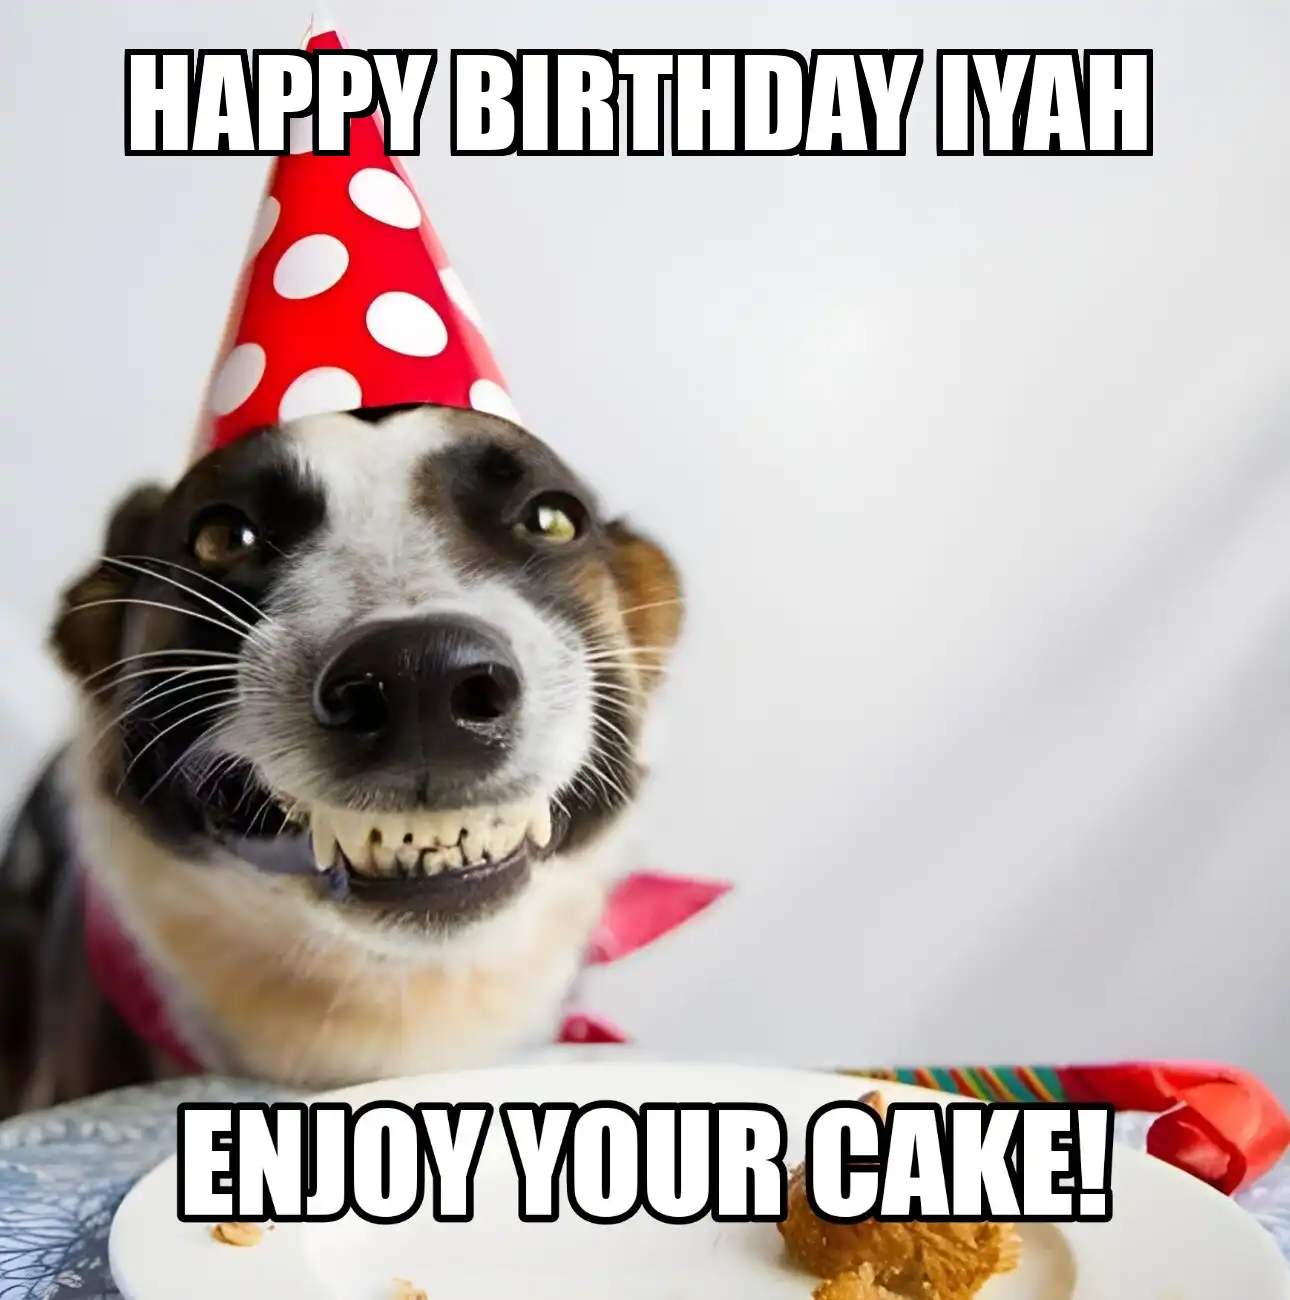 Happy Birthday Iyah Enjoy Your Cake Dog Meme